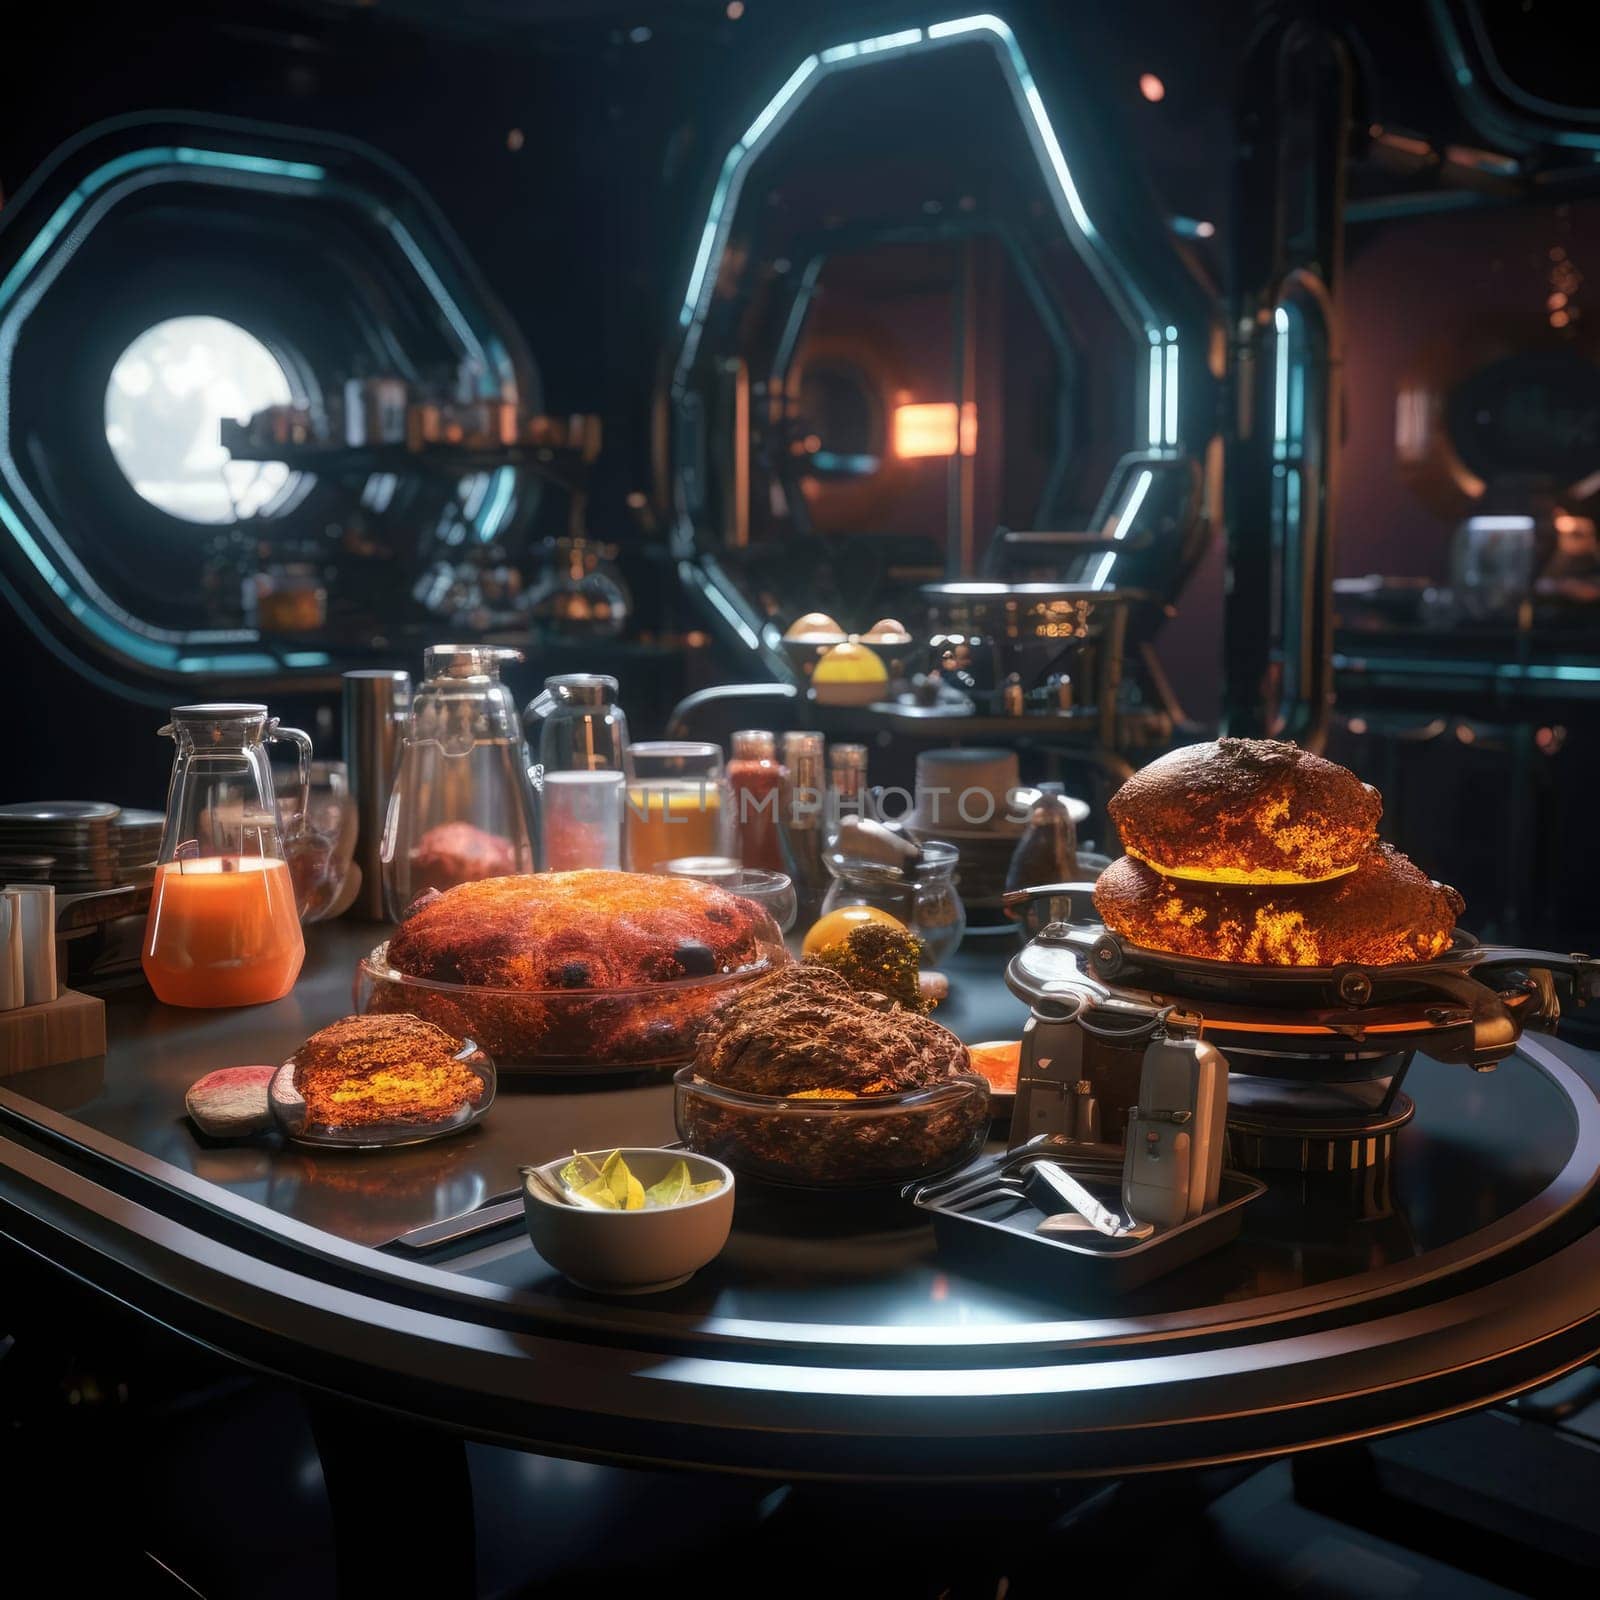 Sci-fi kitchen of the future by cherezoff